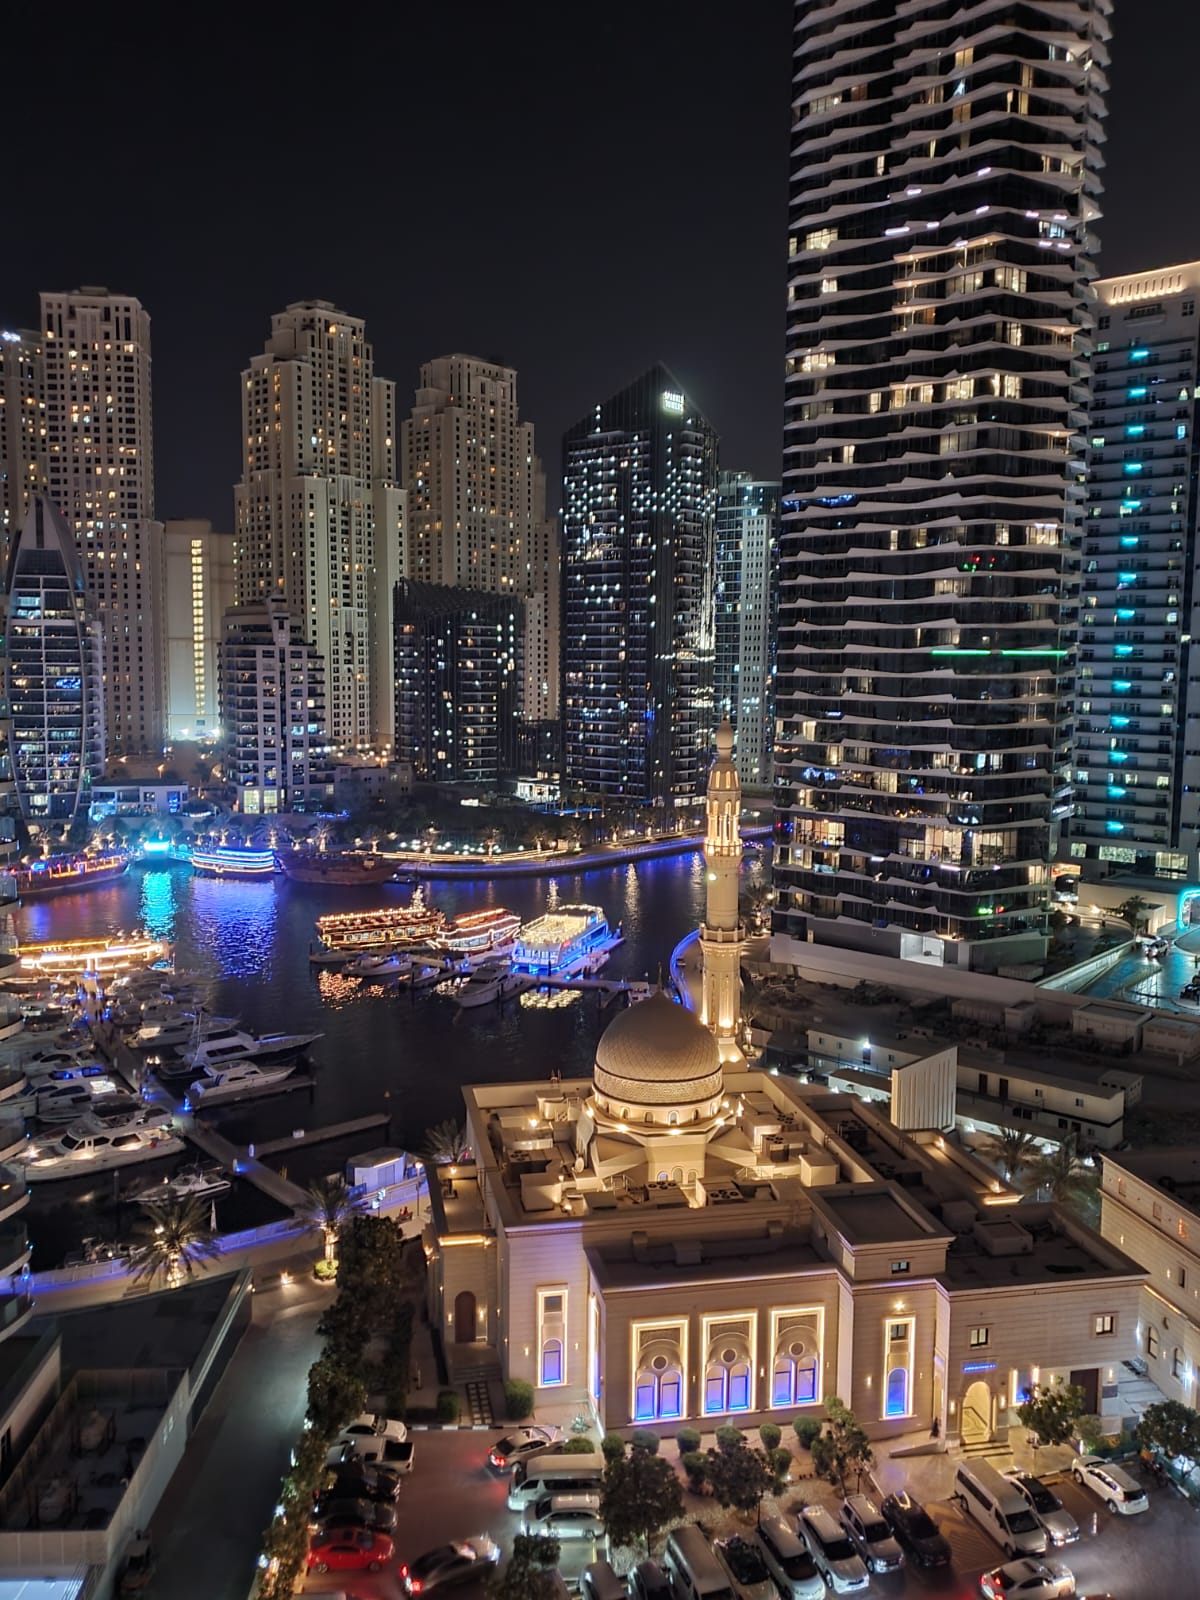 Dubai Marina - Manchester Tower - Where Dreams Ascend